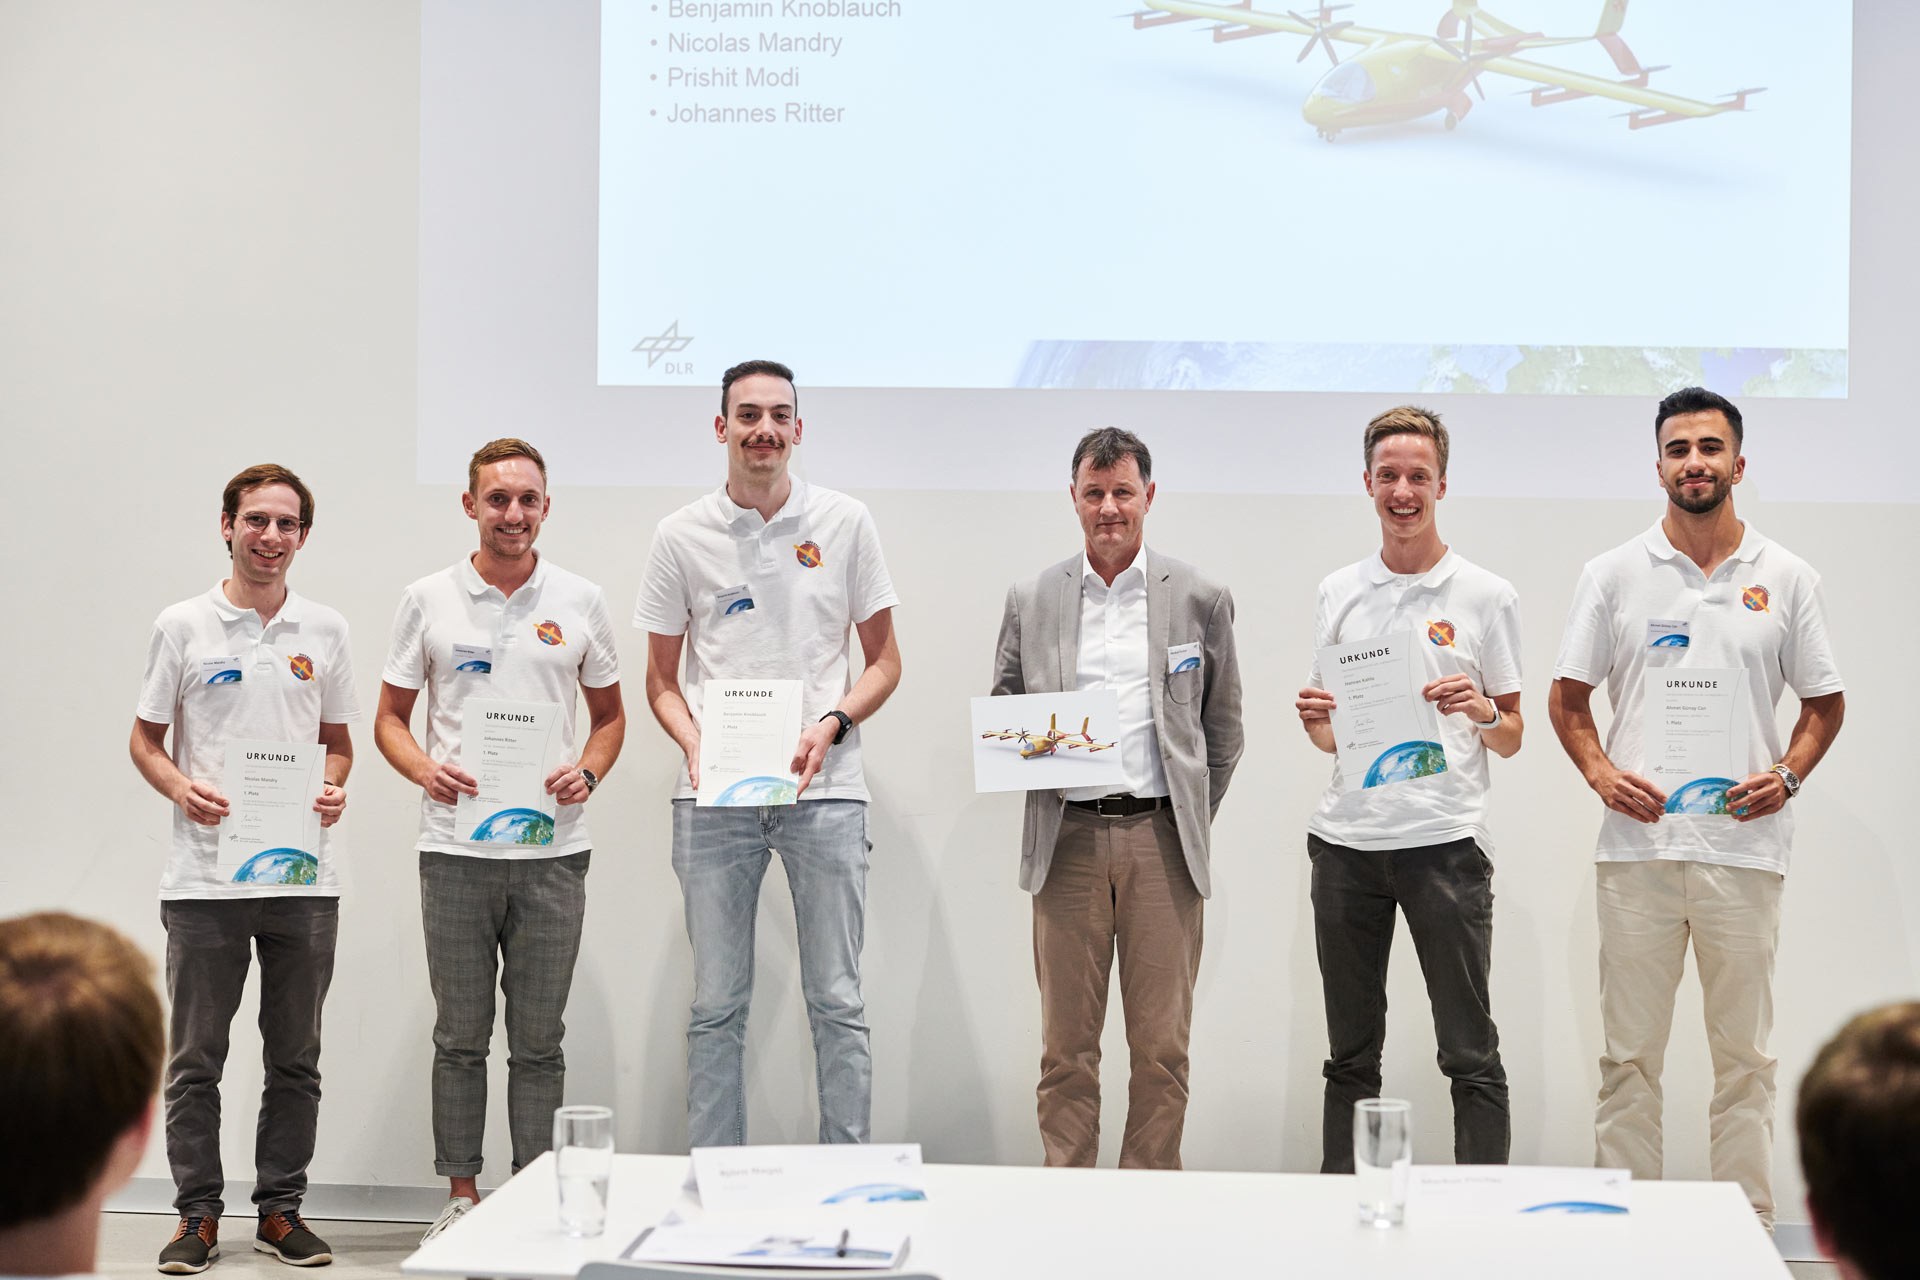 The winning team from the University of Stuttgart at the DLR Design Challenge 2022